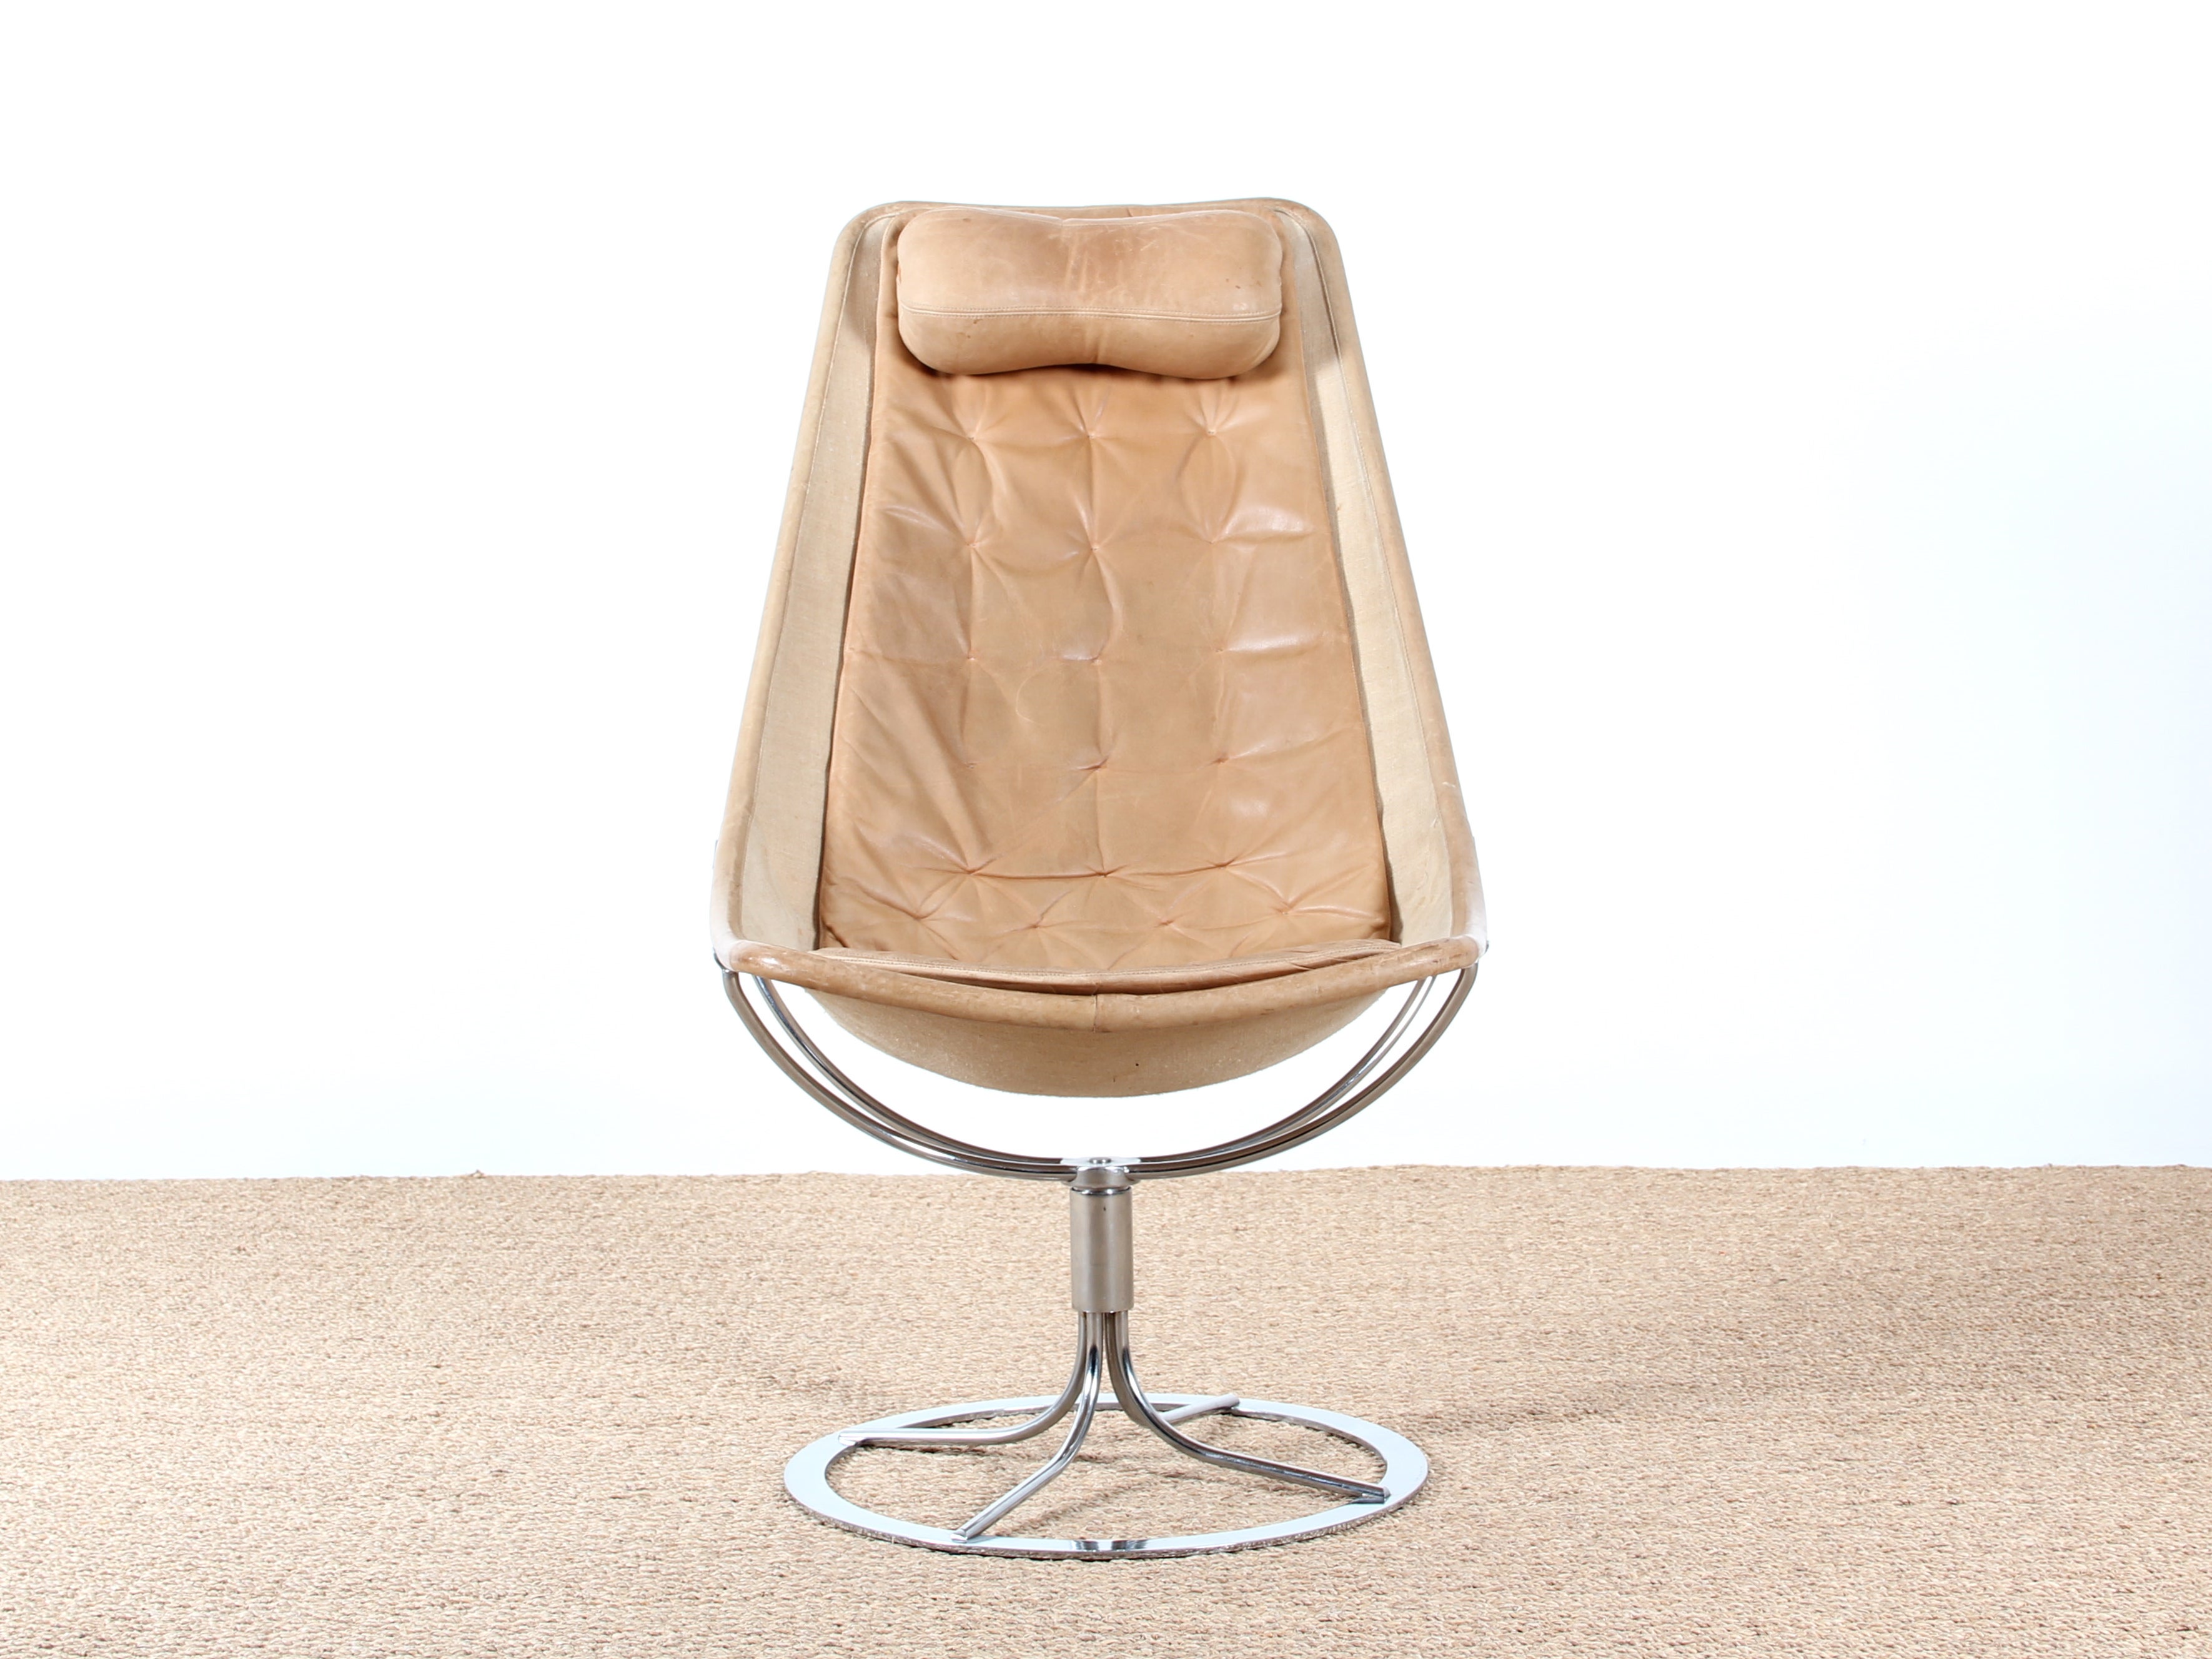 Jetson chair by Bruno Mathsson